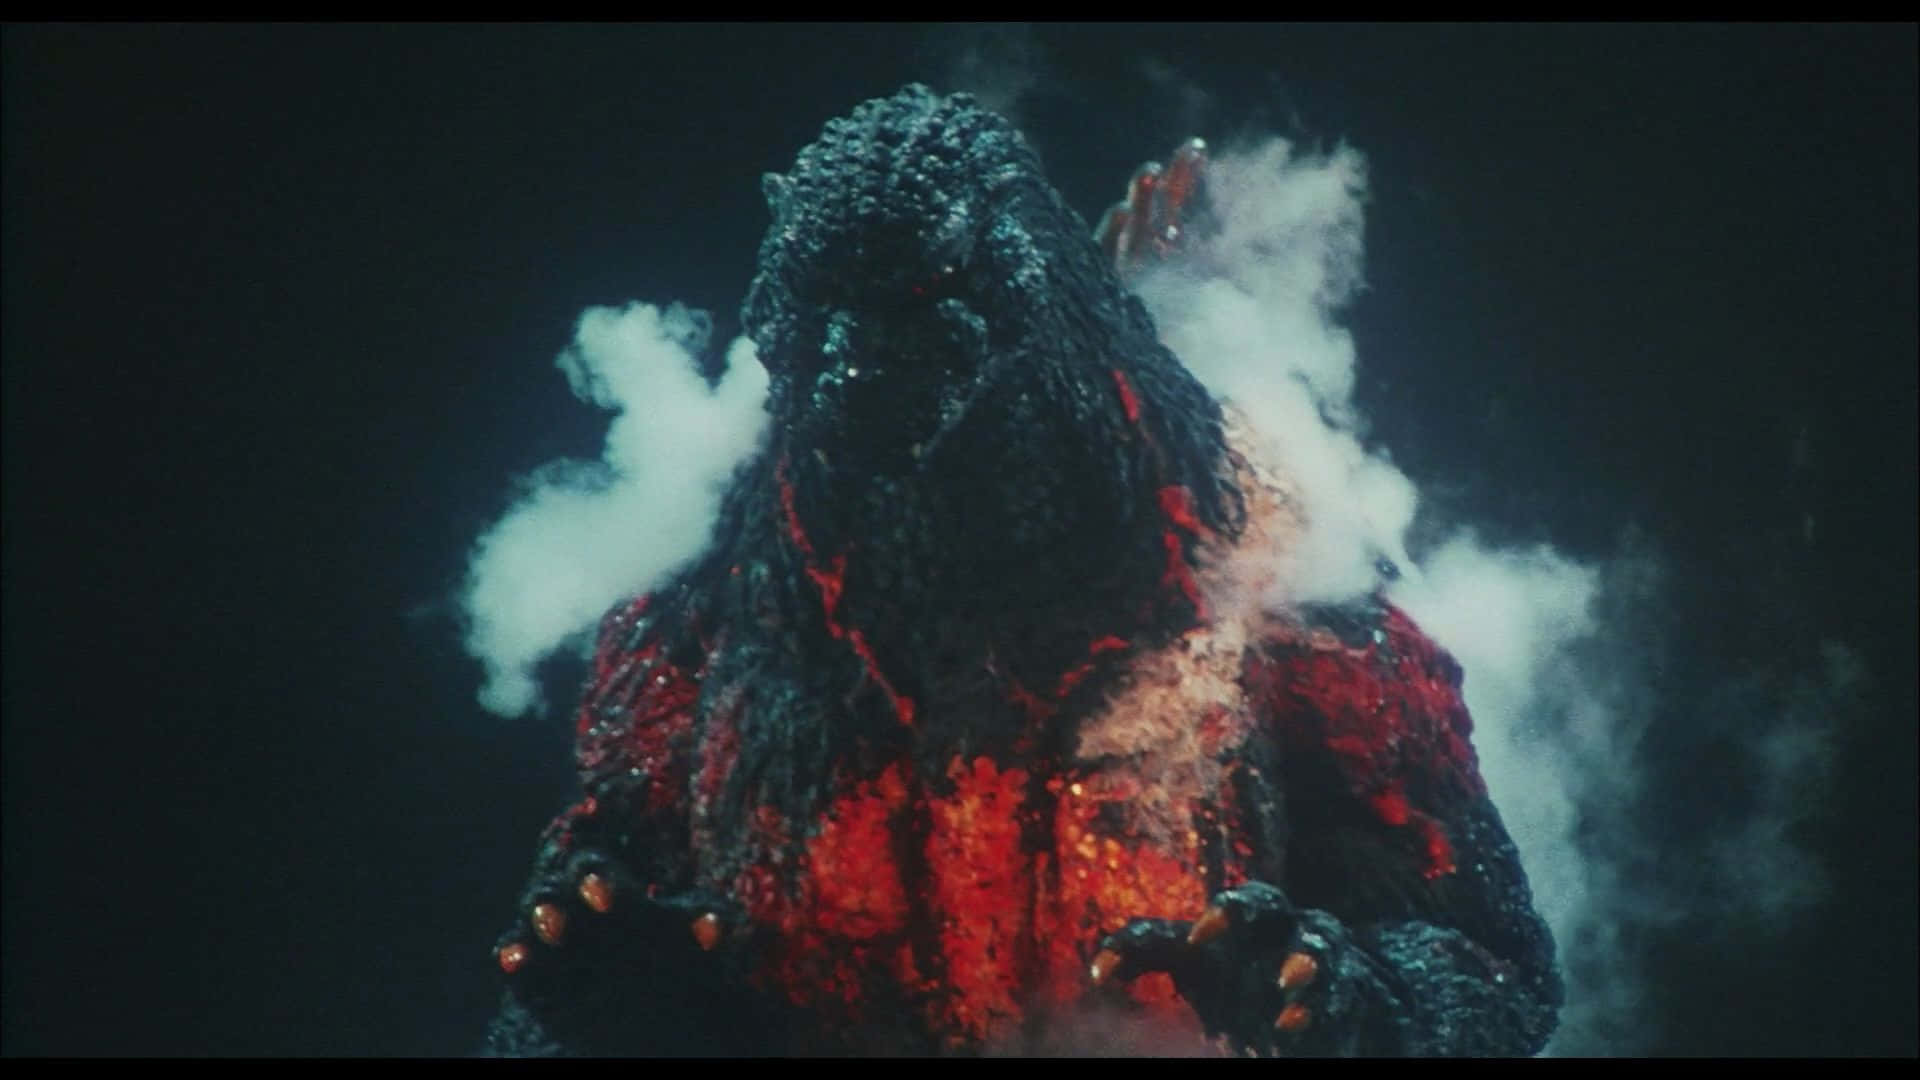 The Iconic Godzilla 1954 Rampaging Through the City Wallpaper